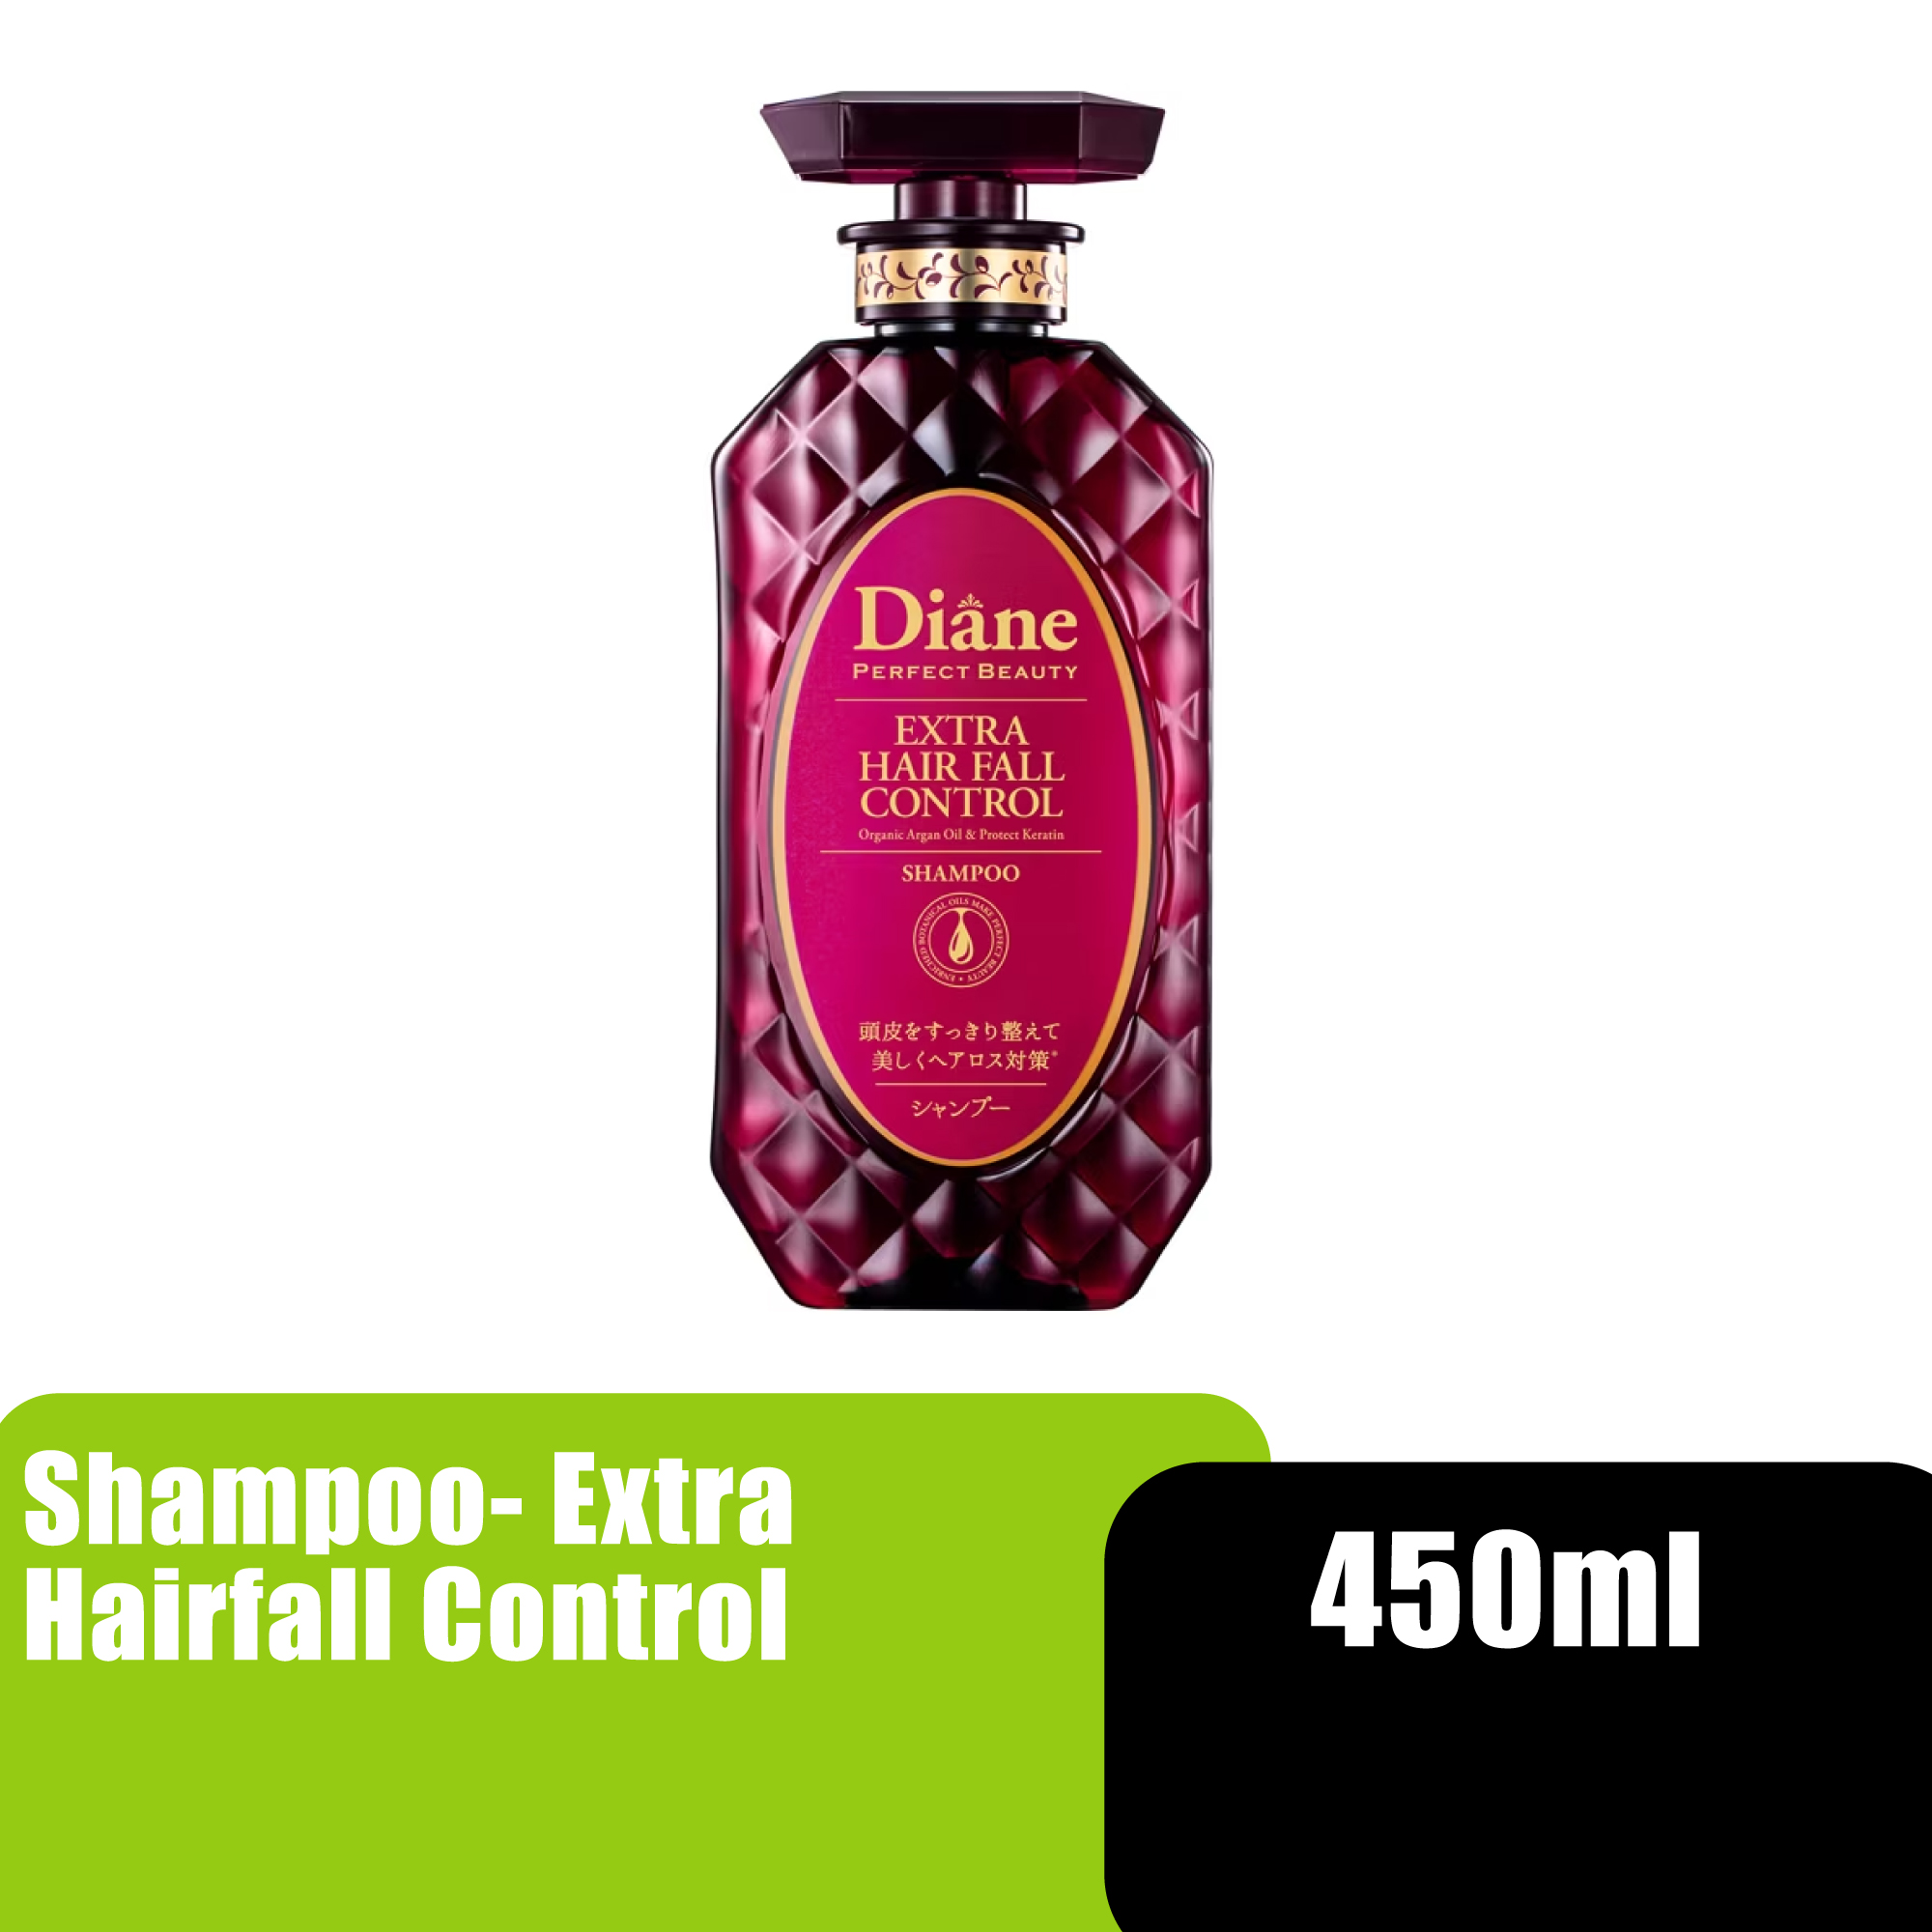 MOIST DIANE Perfect Beauty Extra Hair Fall Control Treatment 450ml, Shampoo & Conditioner